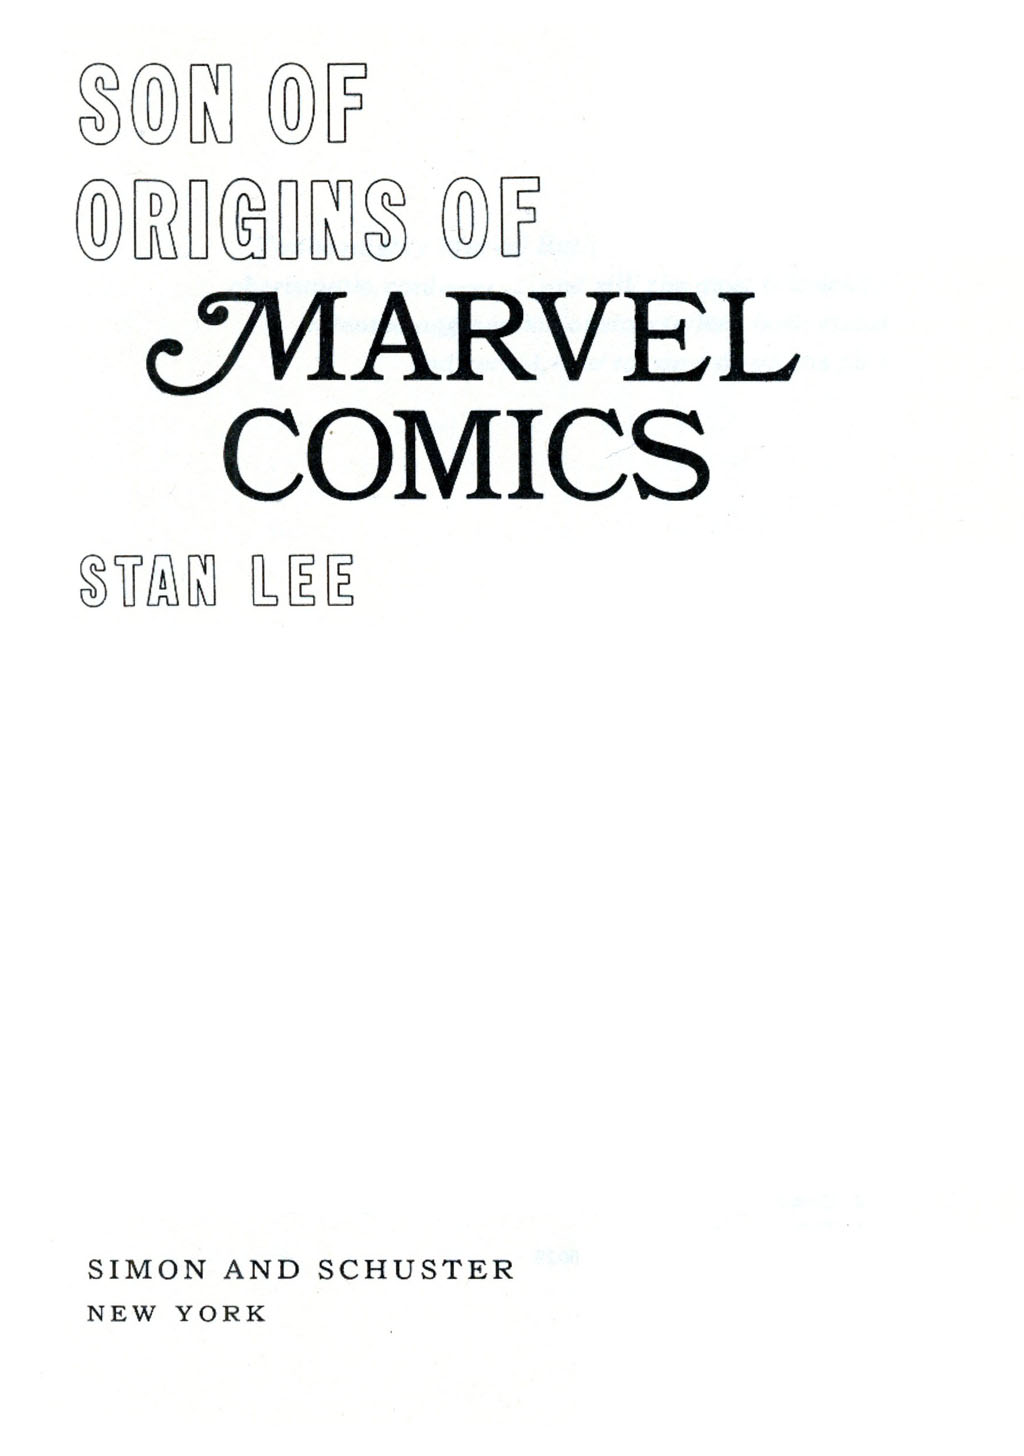 Read online Son of Origins of Marvel Comics comic -  Issue # TPB - 2